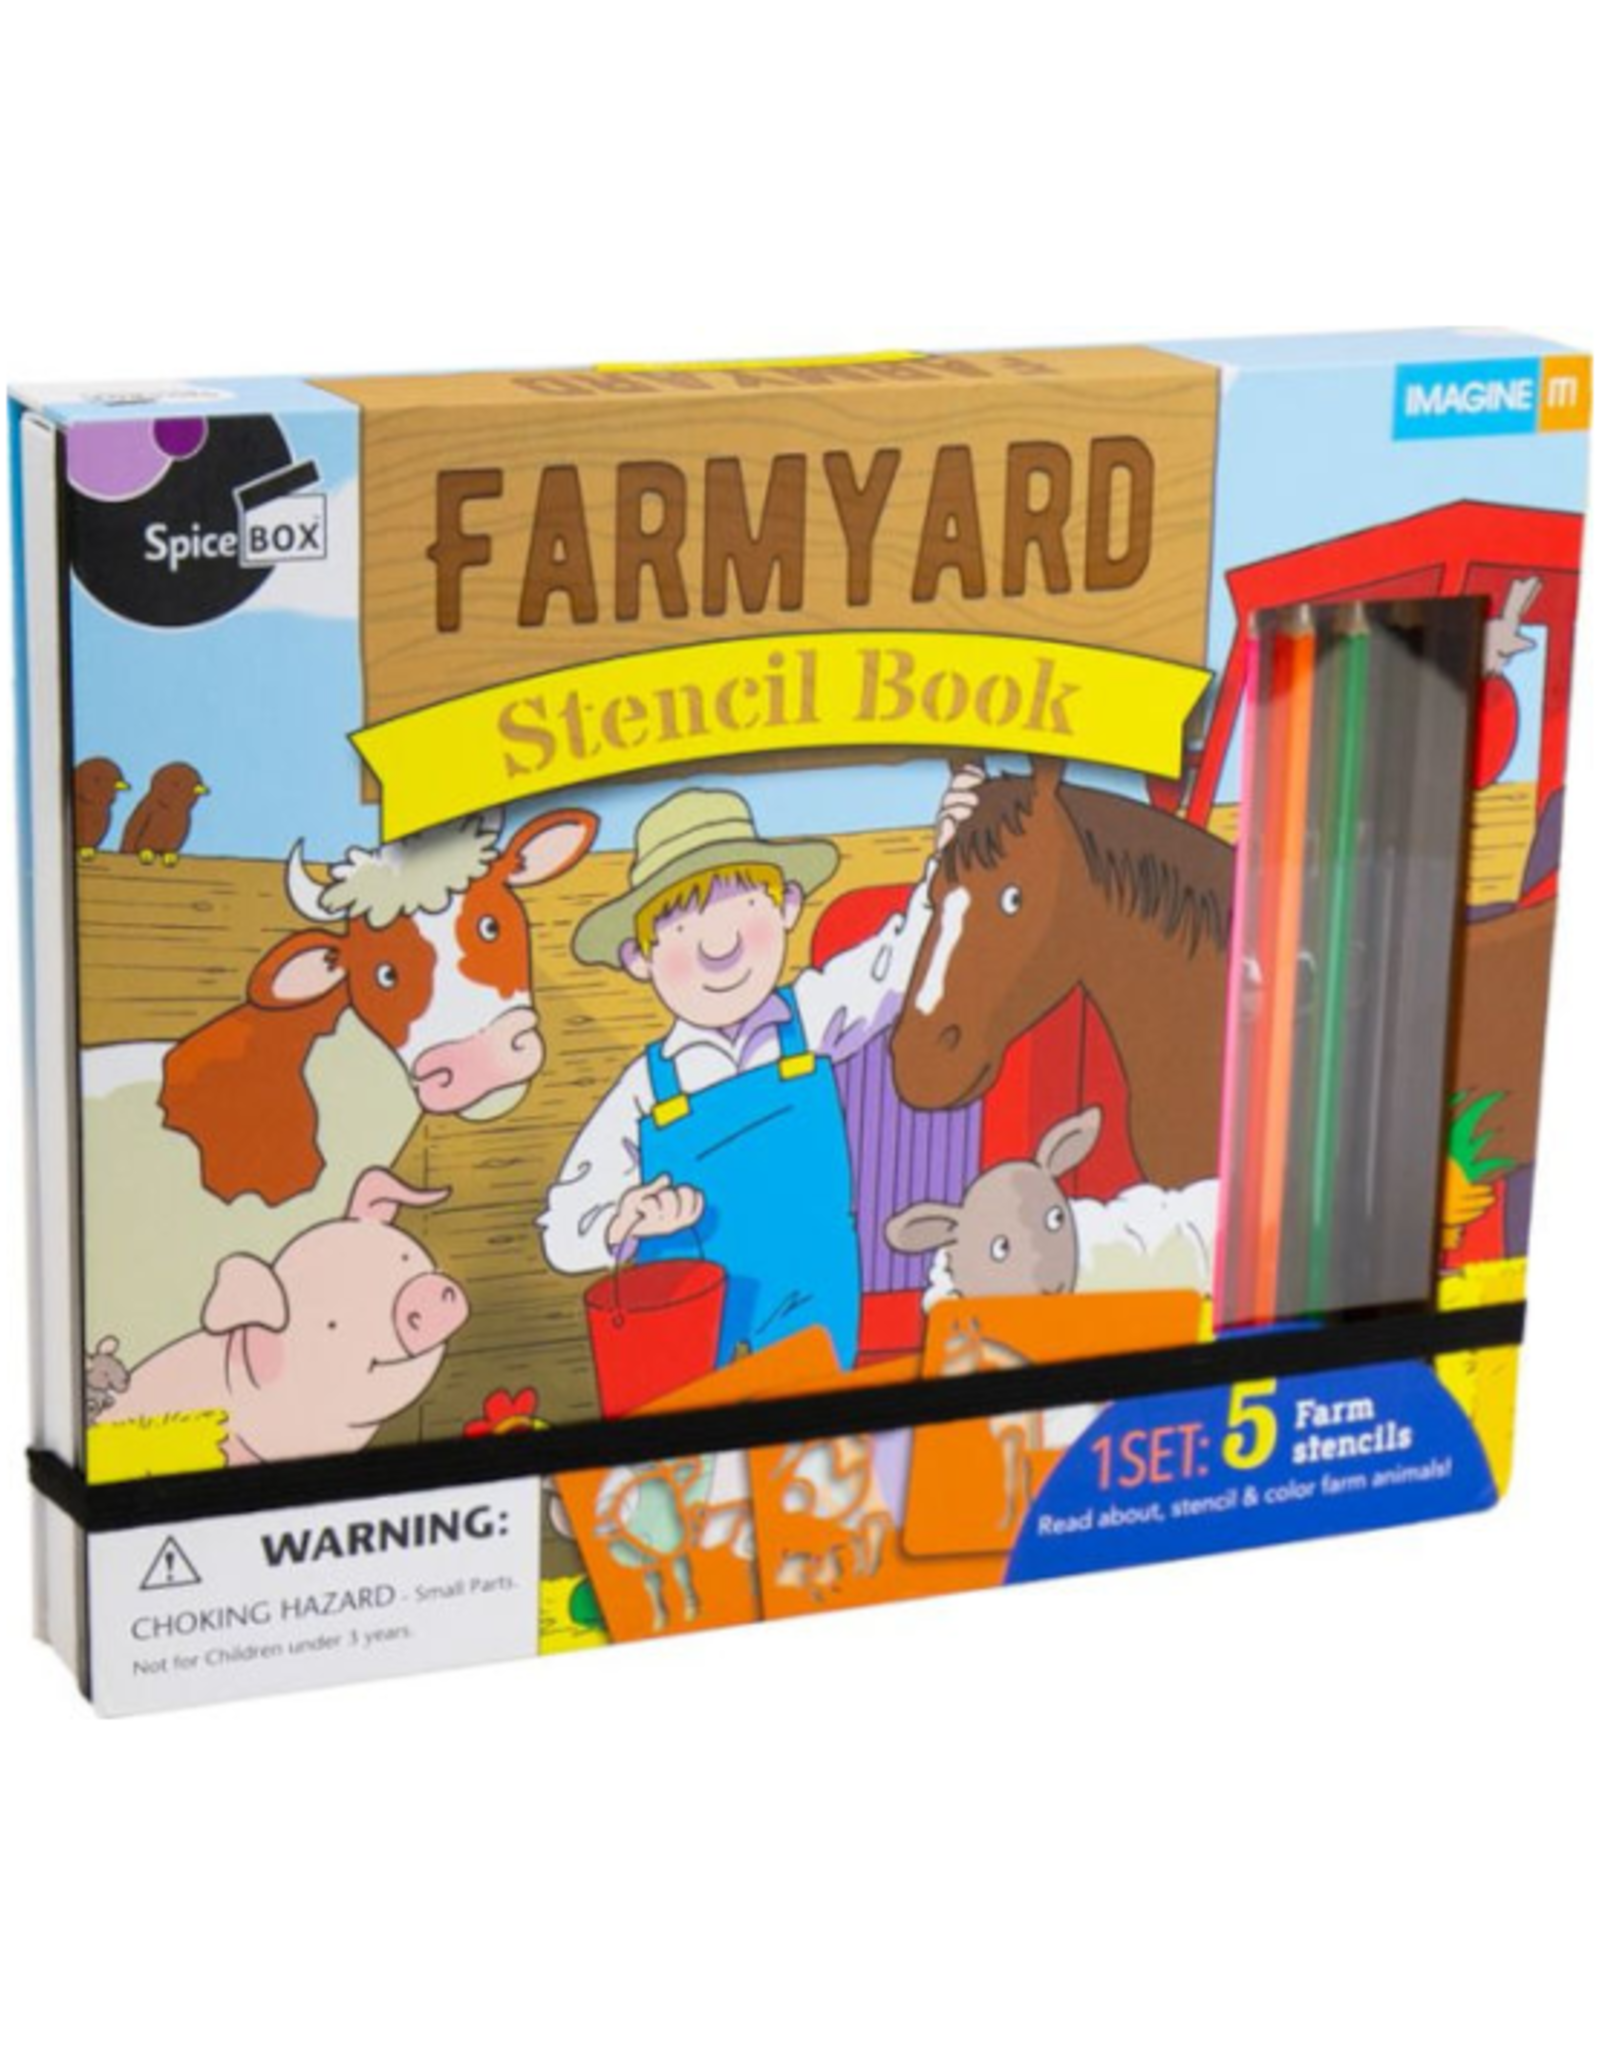 SpiceBox Spicebox - Imagine It! Farmyard Stencils